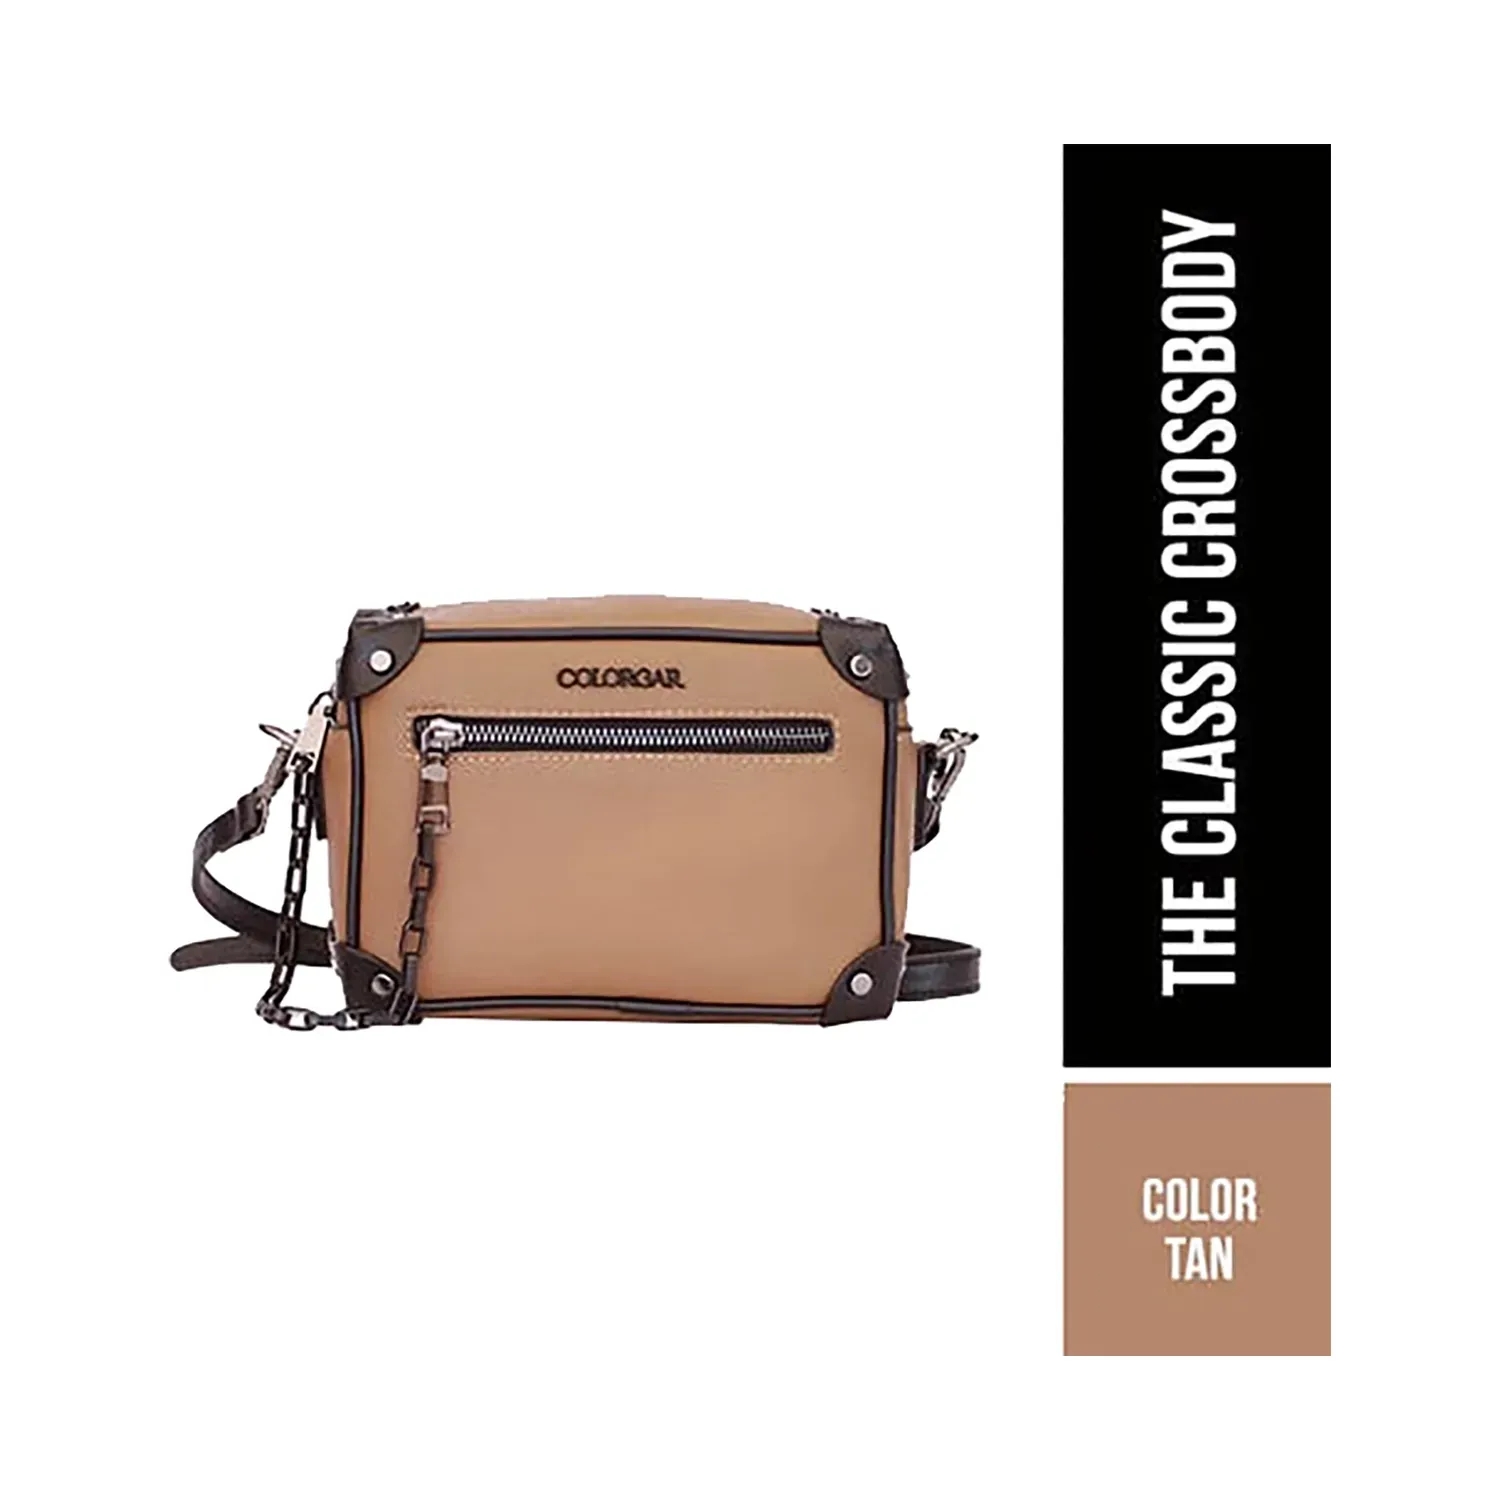 Colorbar | Colorbar The Classic Crossbody - Tan